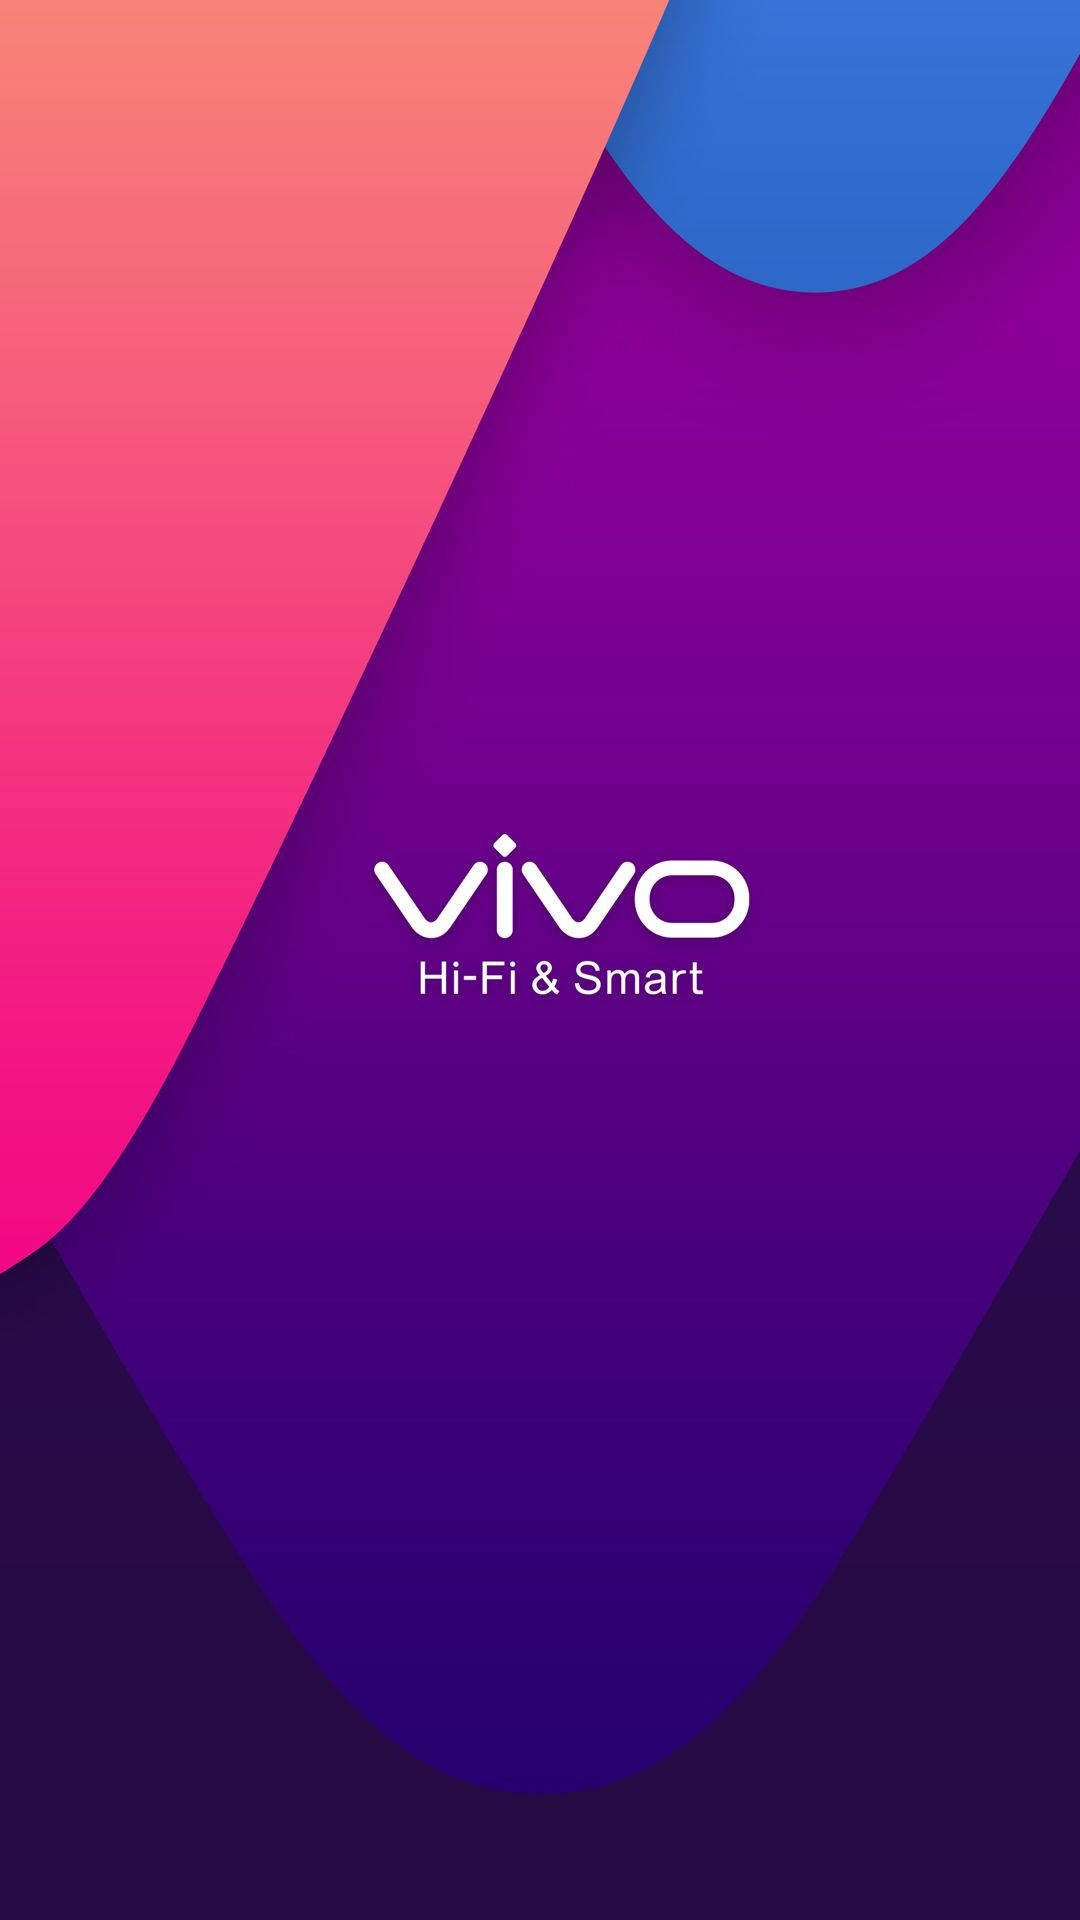 New Vivo smartphone - Focus Taiwan